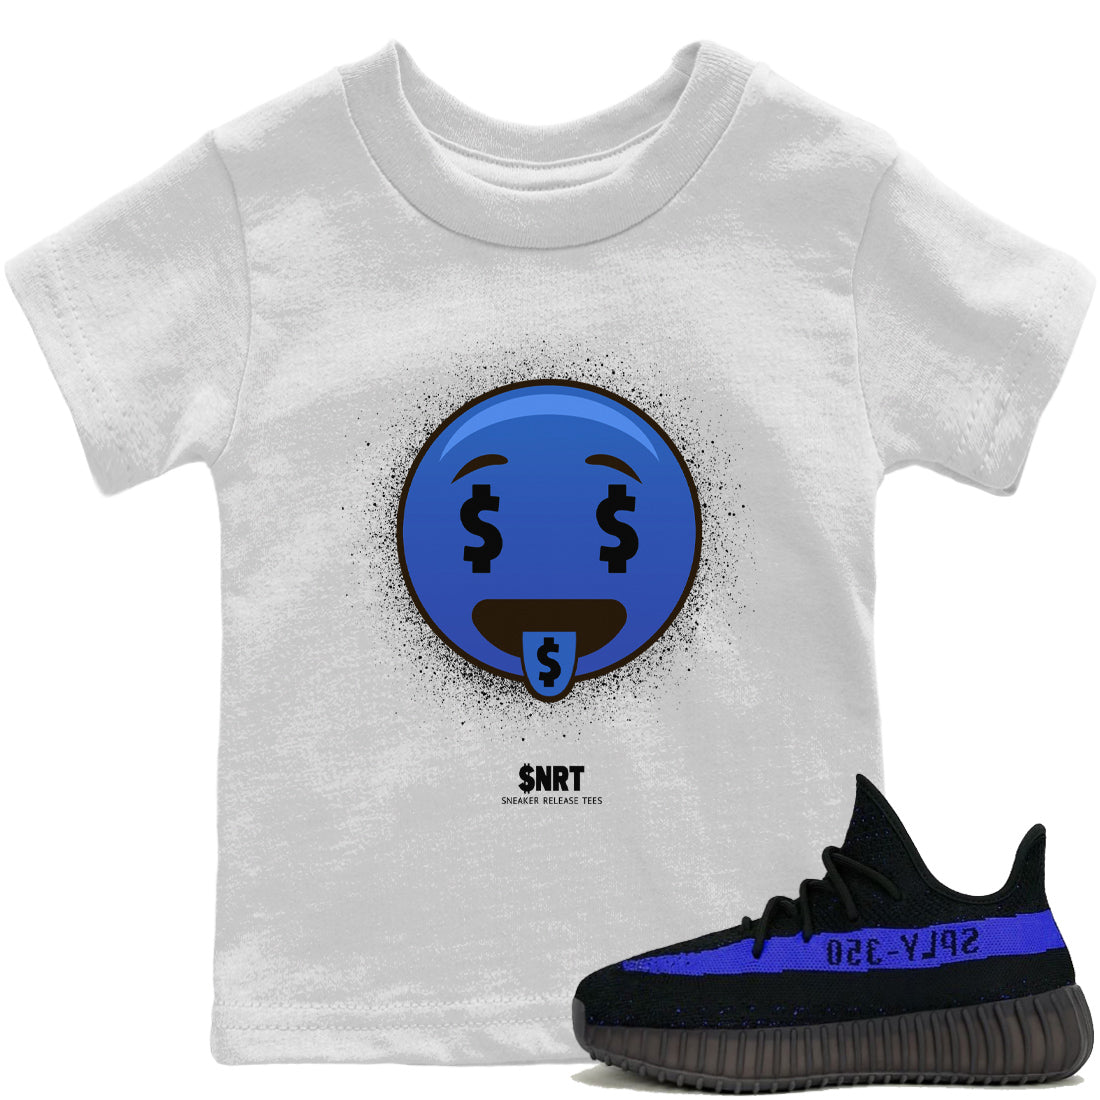 Yeezy 350 Dazzling Blue Sneaker Match Tees Rich Emoji Sneaker Tees Yeezy 350 Dazzling Blue Sneaker Release Tees Kids Shirts